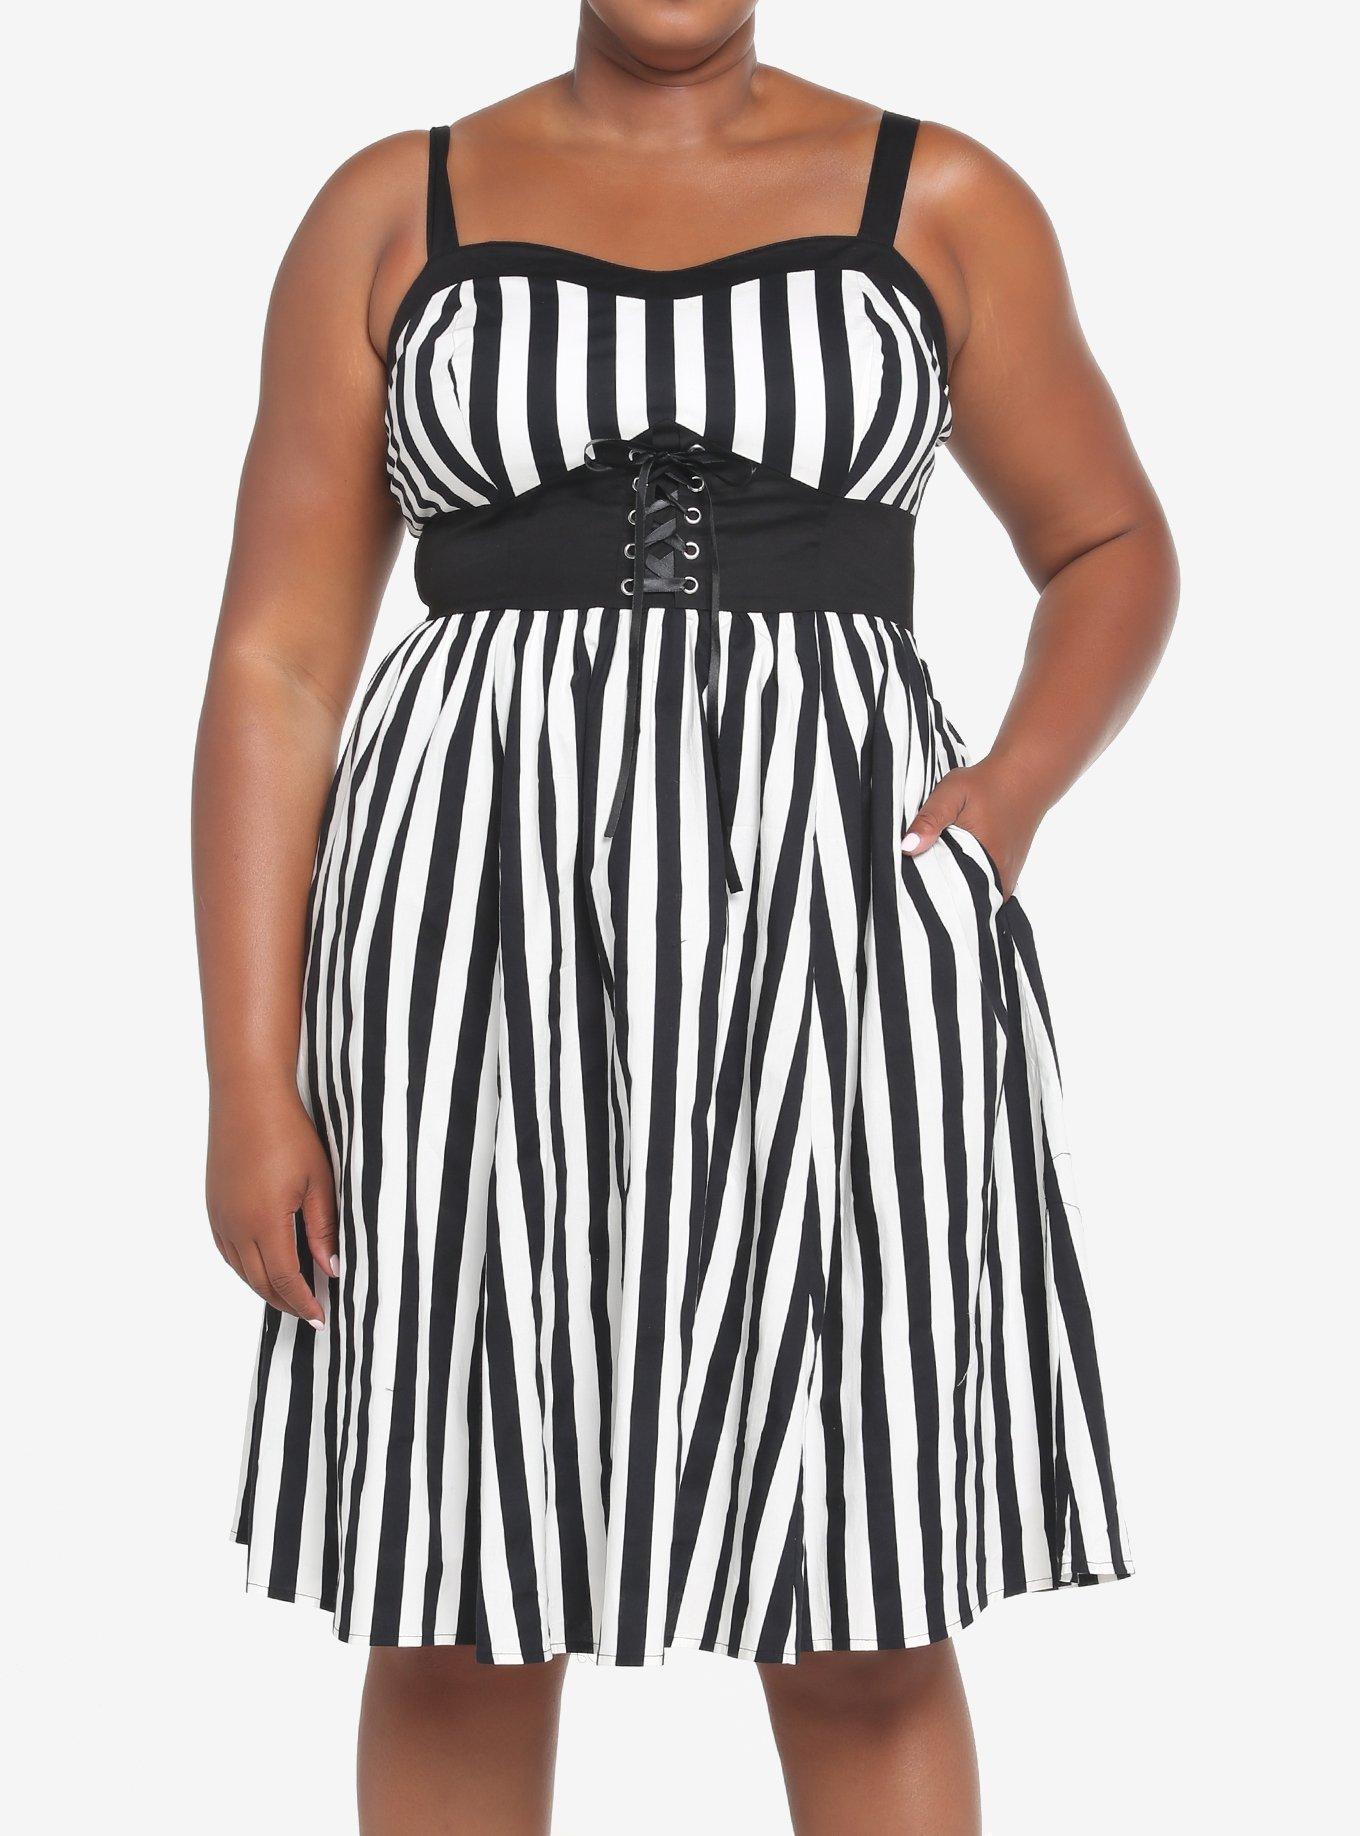 Steampunk Plus Size Clothing & Costumes Black  White Stripe Corset Dress Plus Size $39.92 AT vintagedancer.com